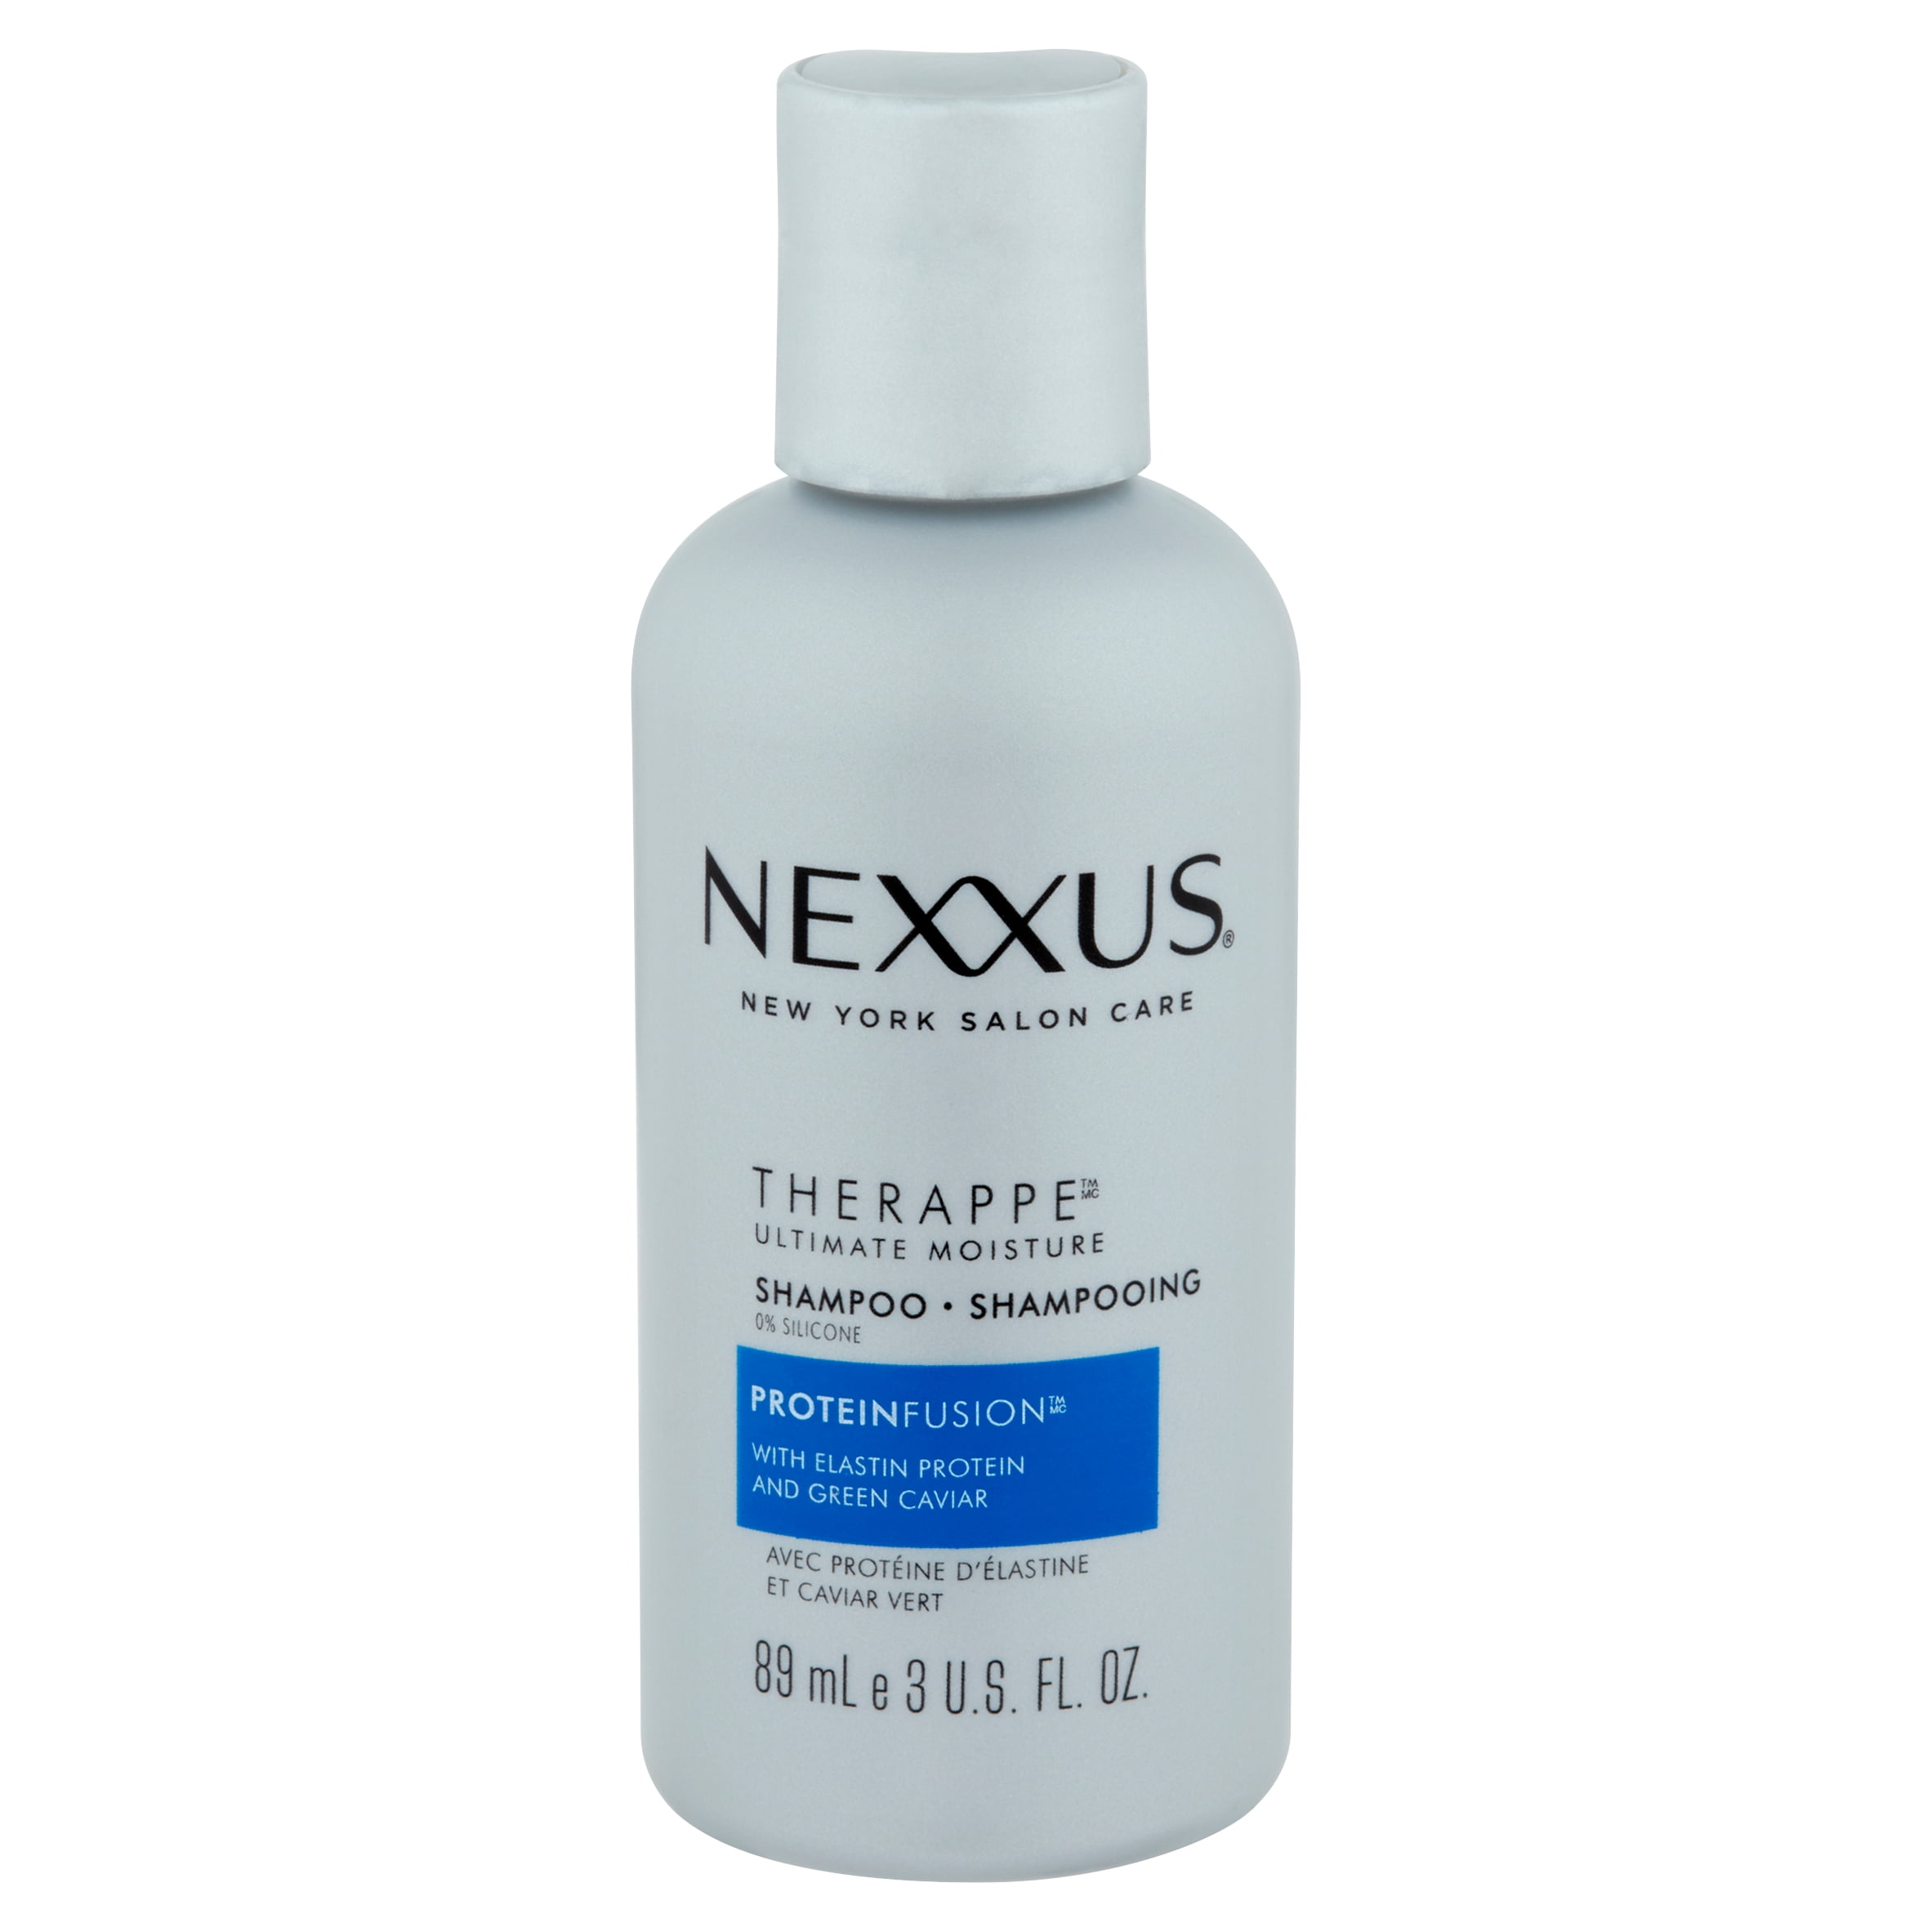 Nexxus Therappe Ultimate Moisture Shampoo 3 fl oz